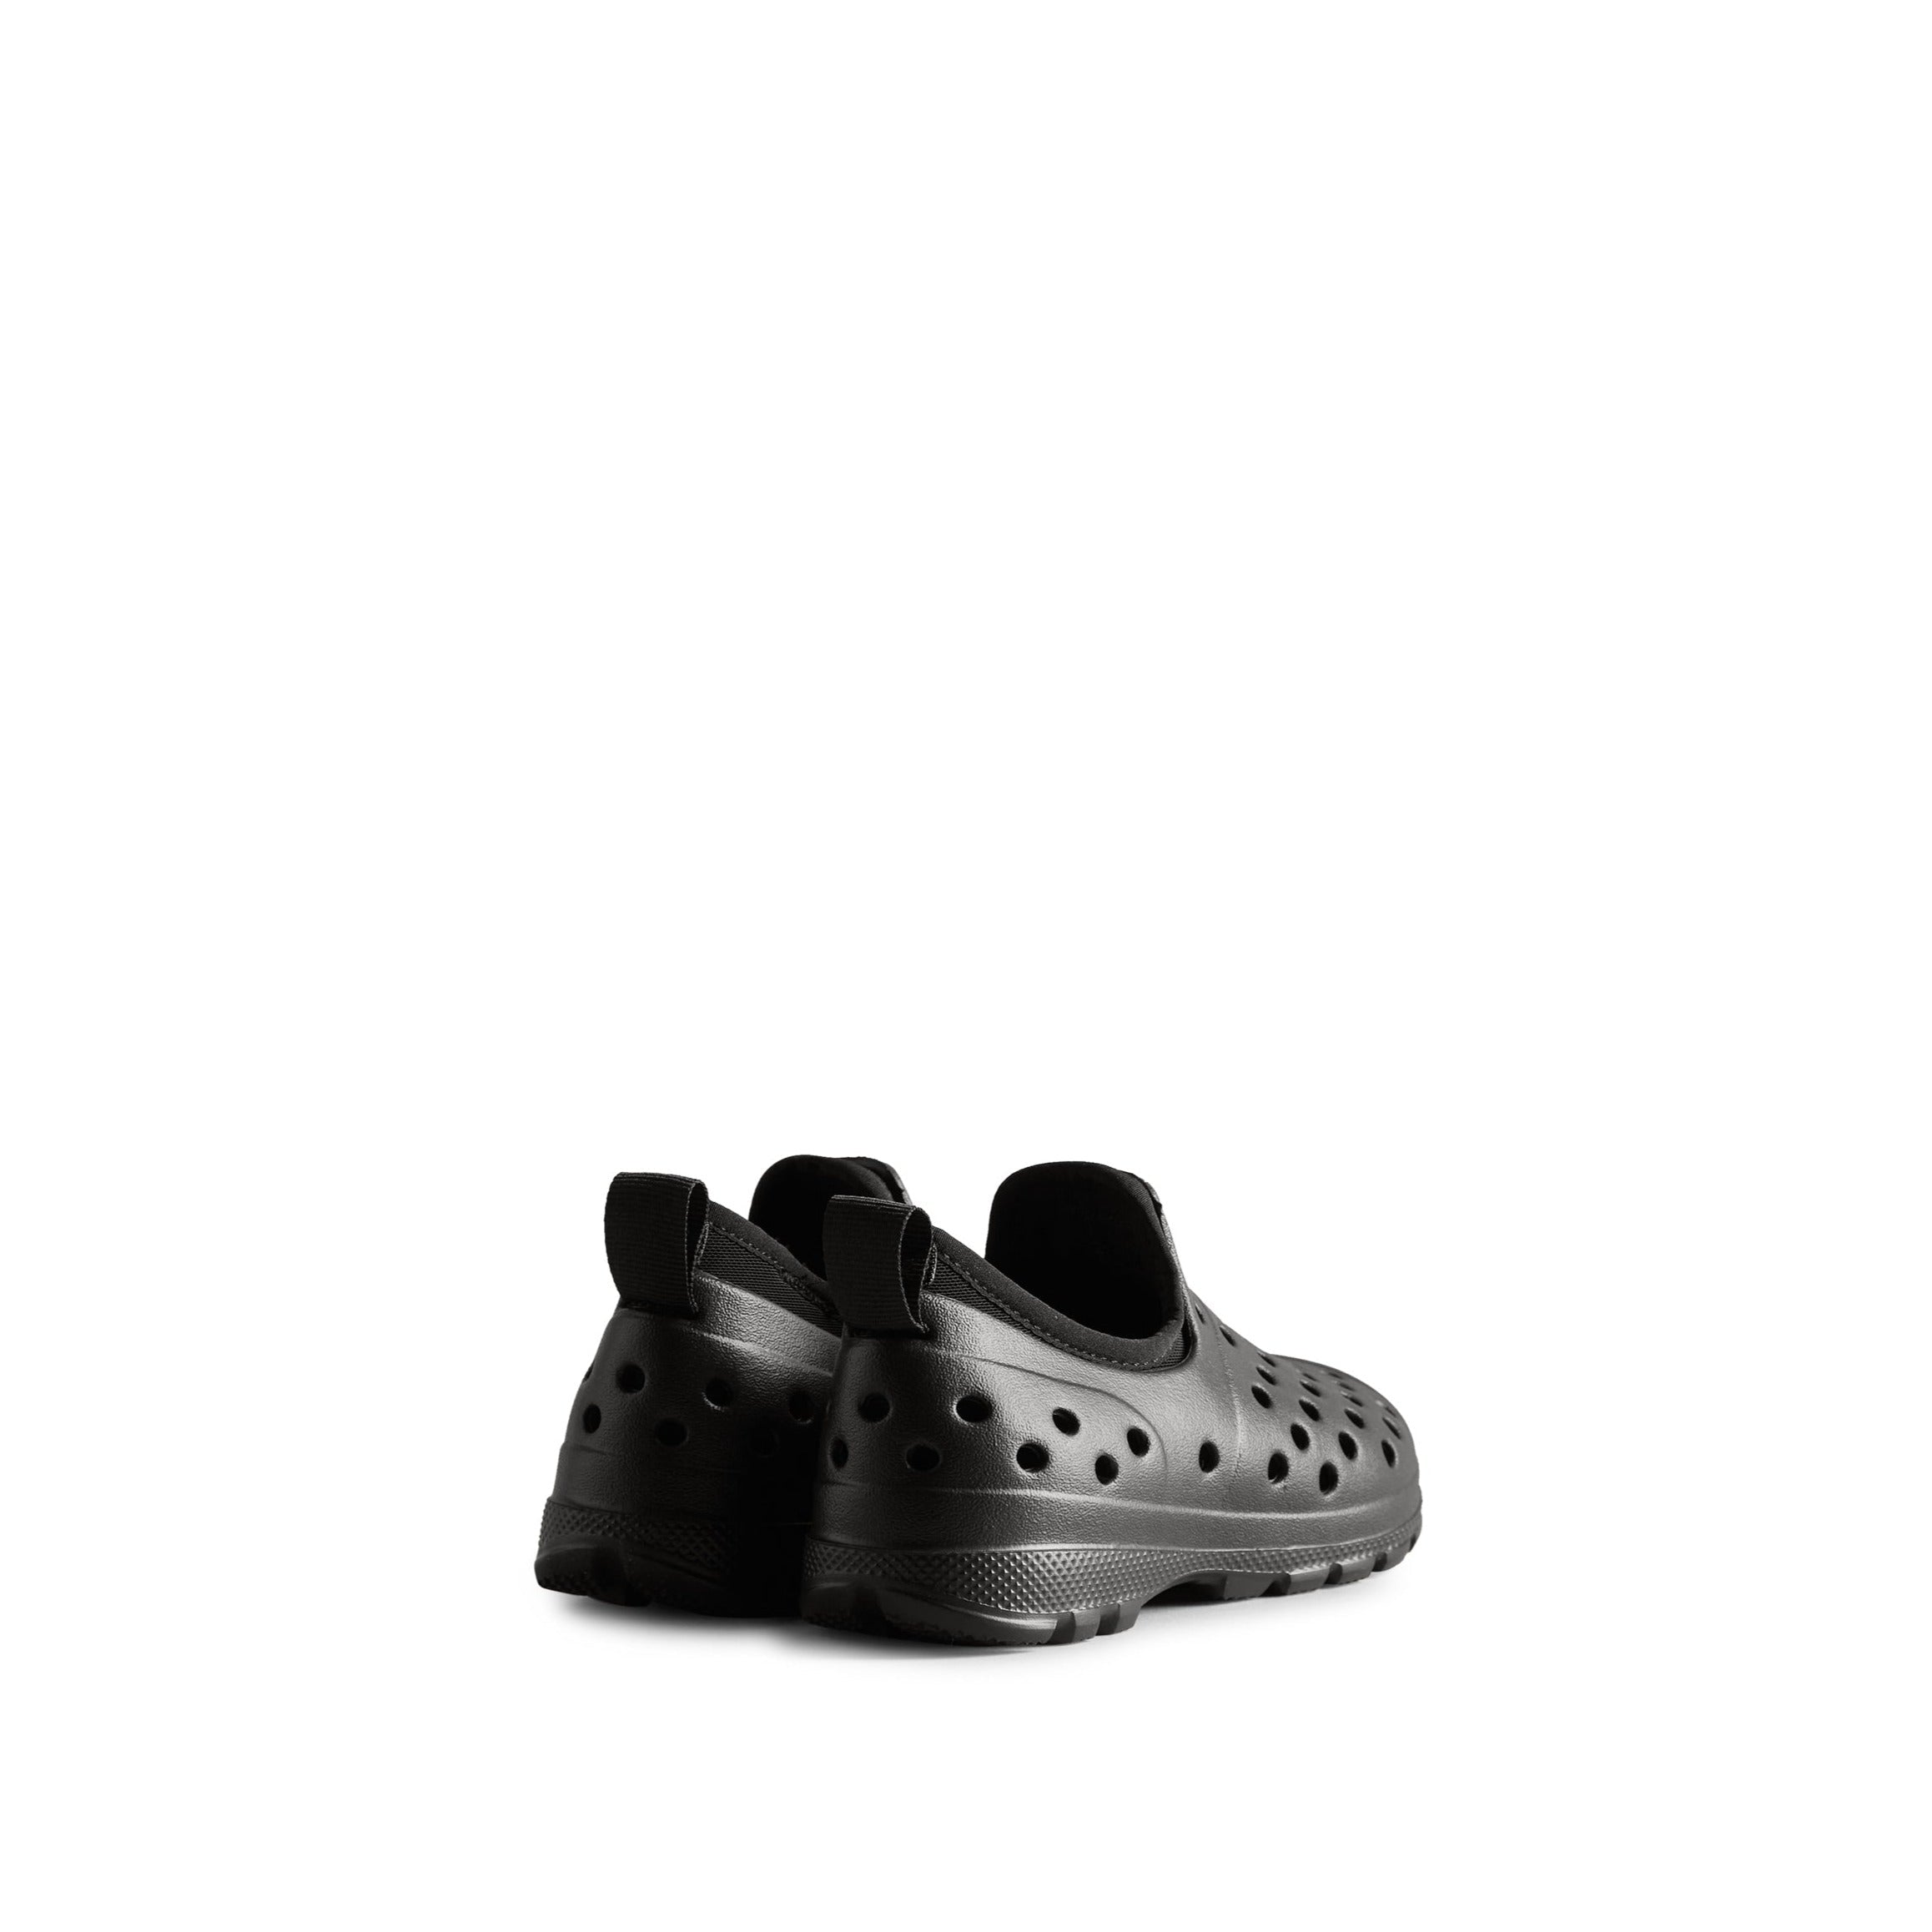 Sample UGG Little Kids Water Shoe Shoes   